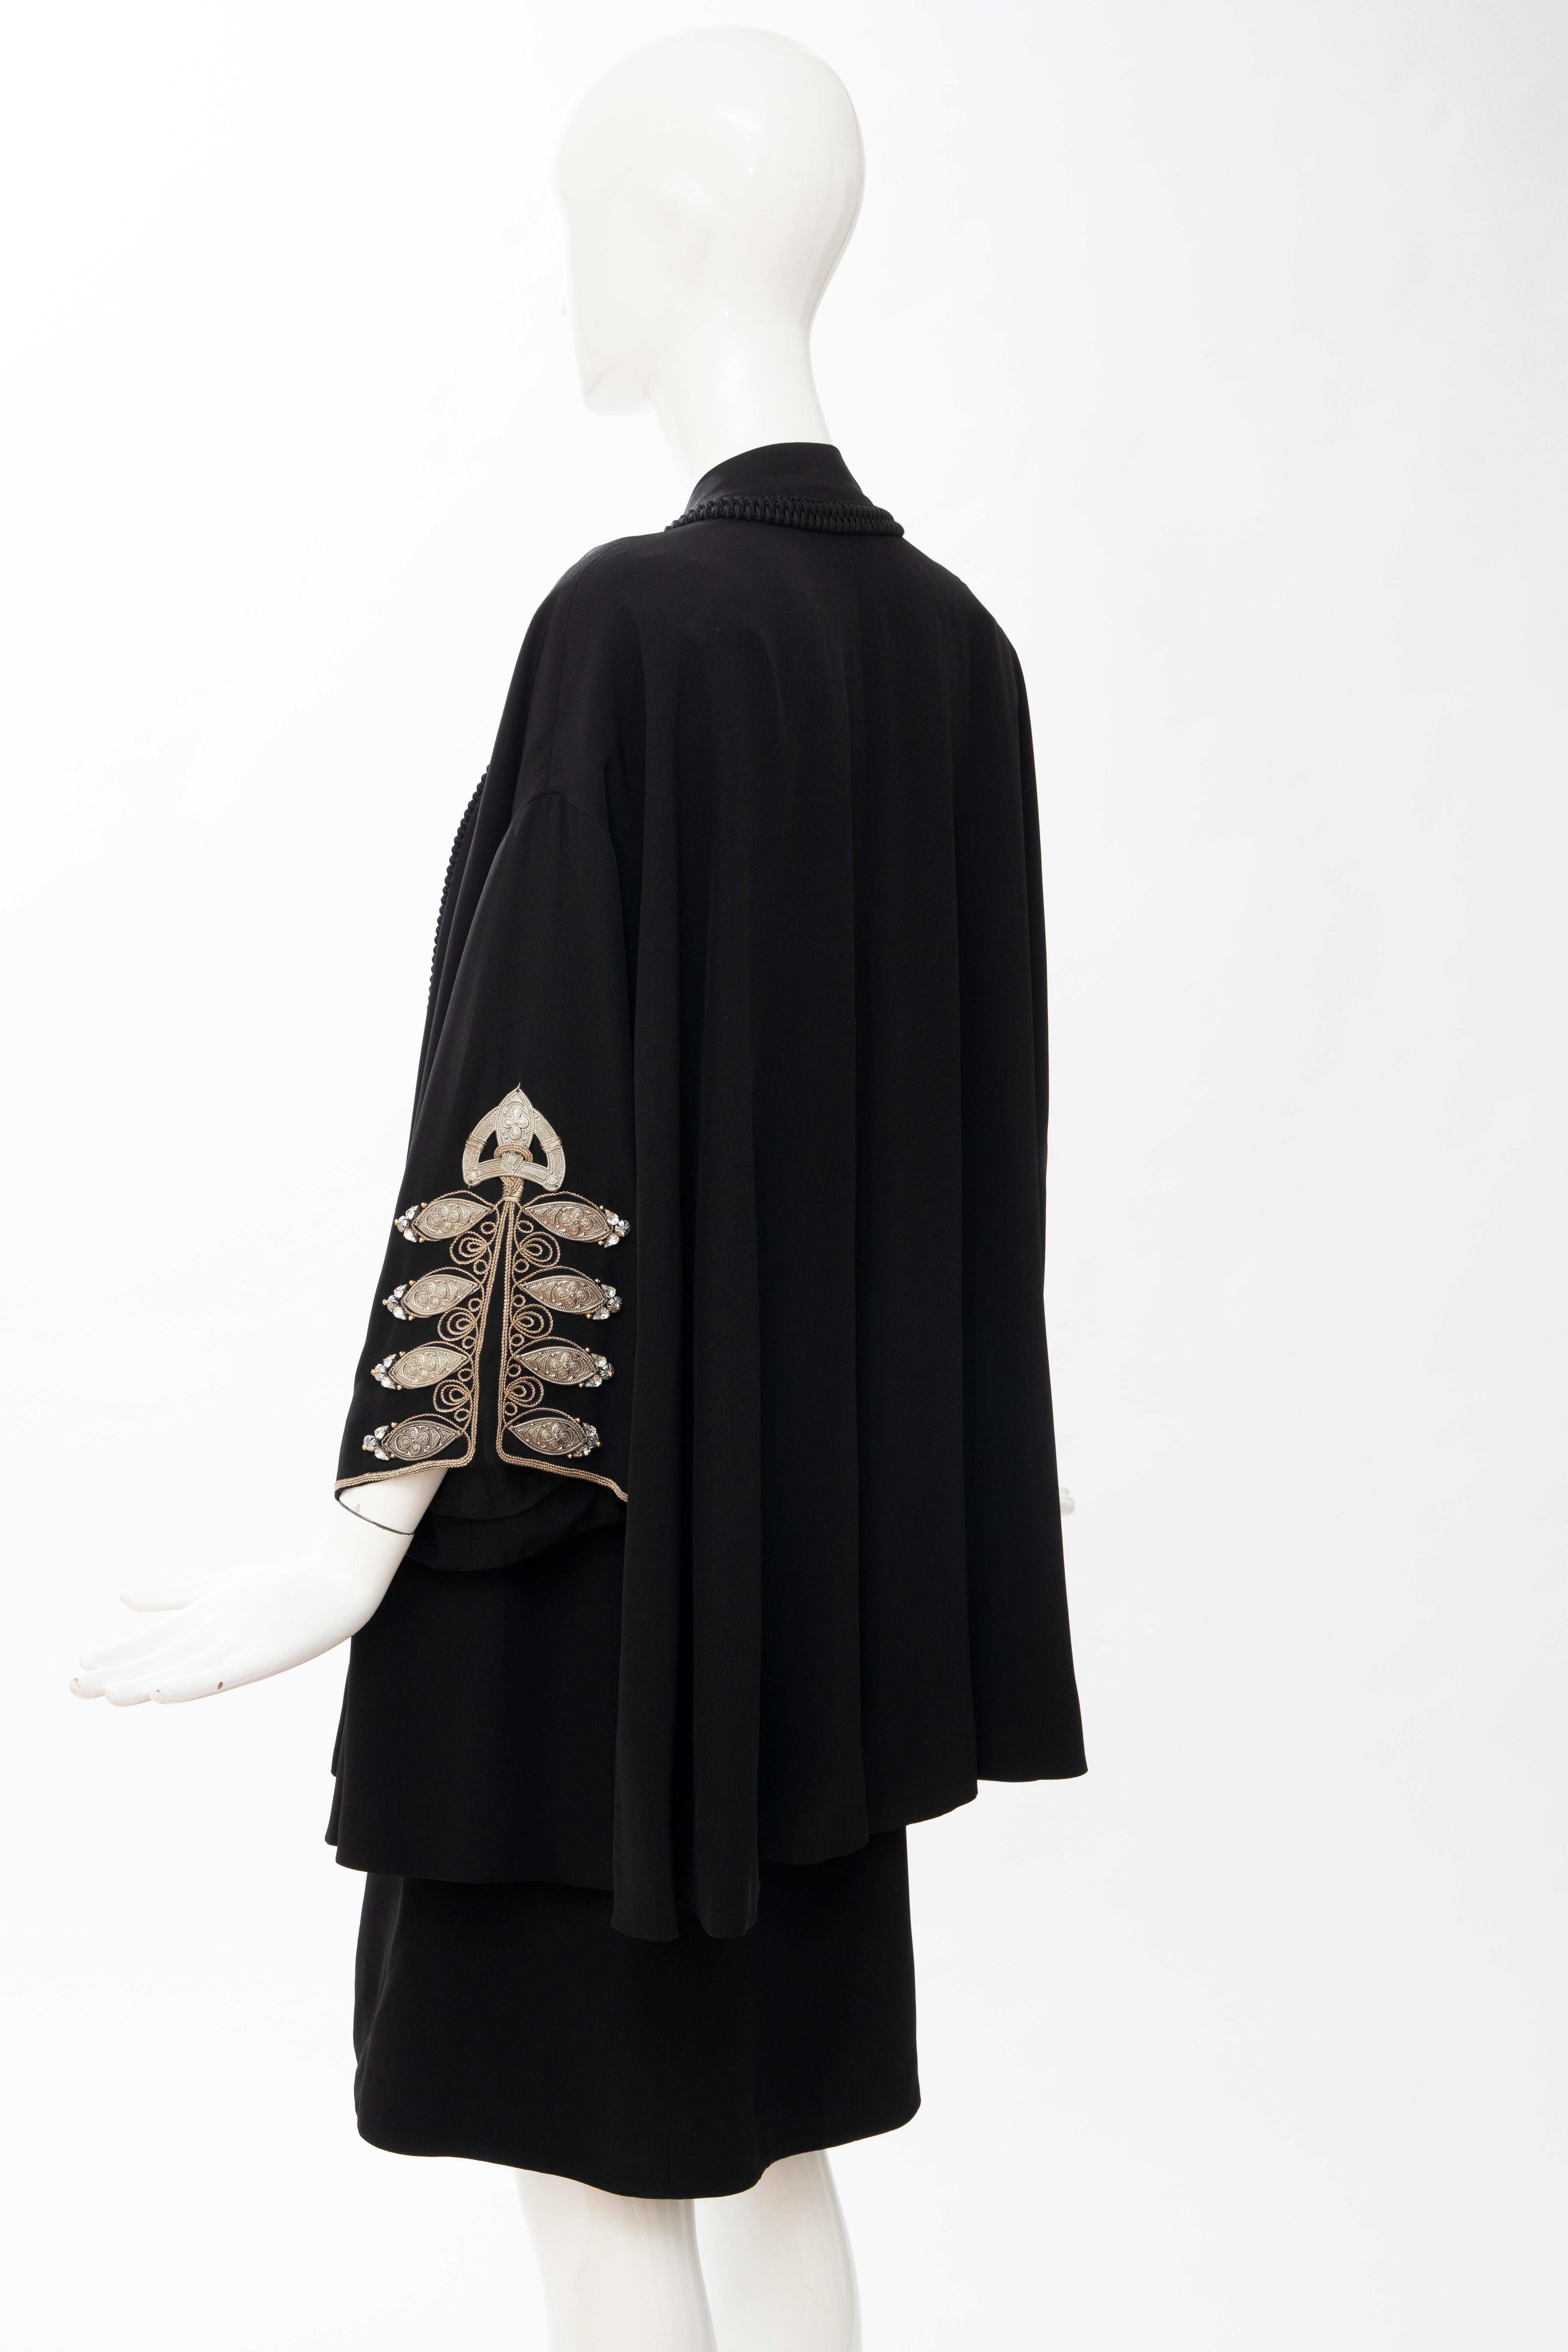 Christian Dior Gianfranco Ferré Numbered Black Embroidered Dress Ensemble, 1991 5